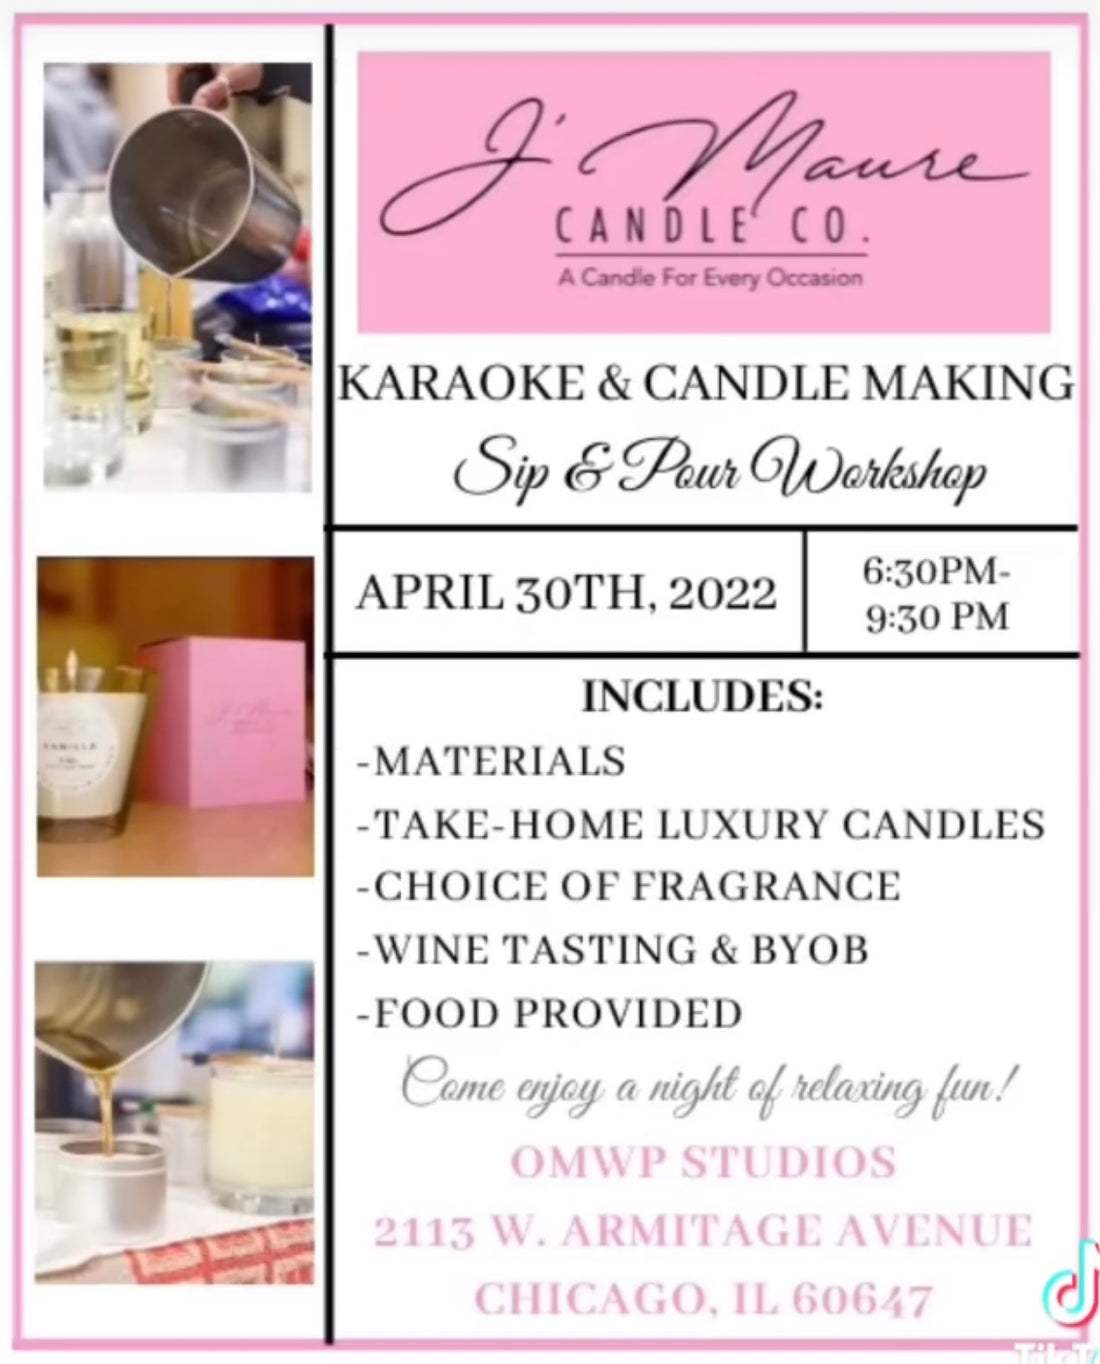 Karaoke & Candle Making